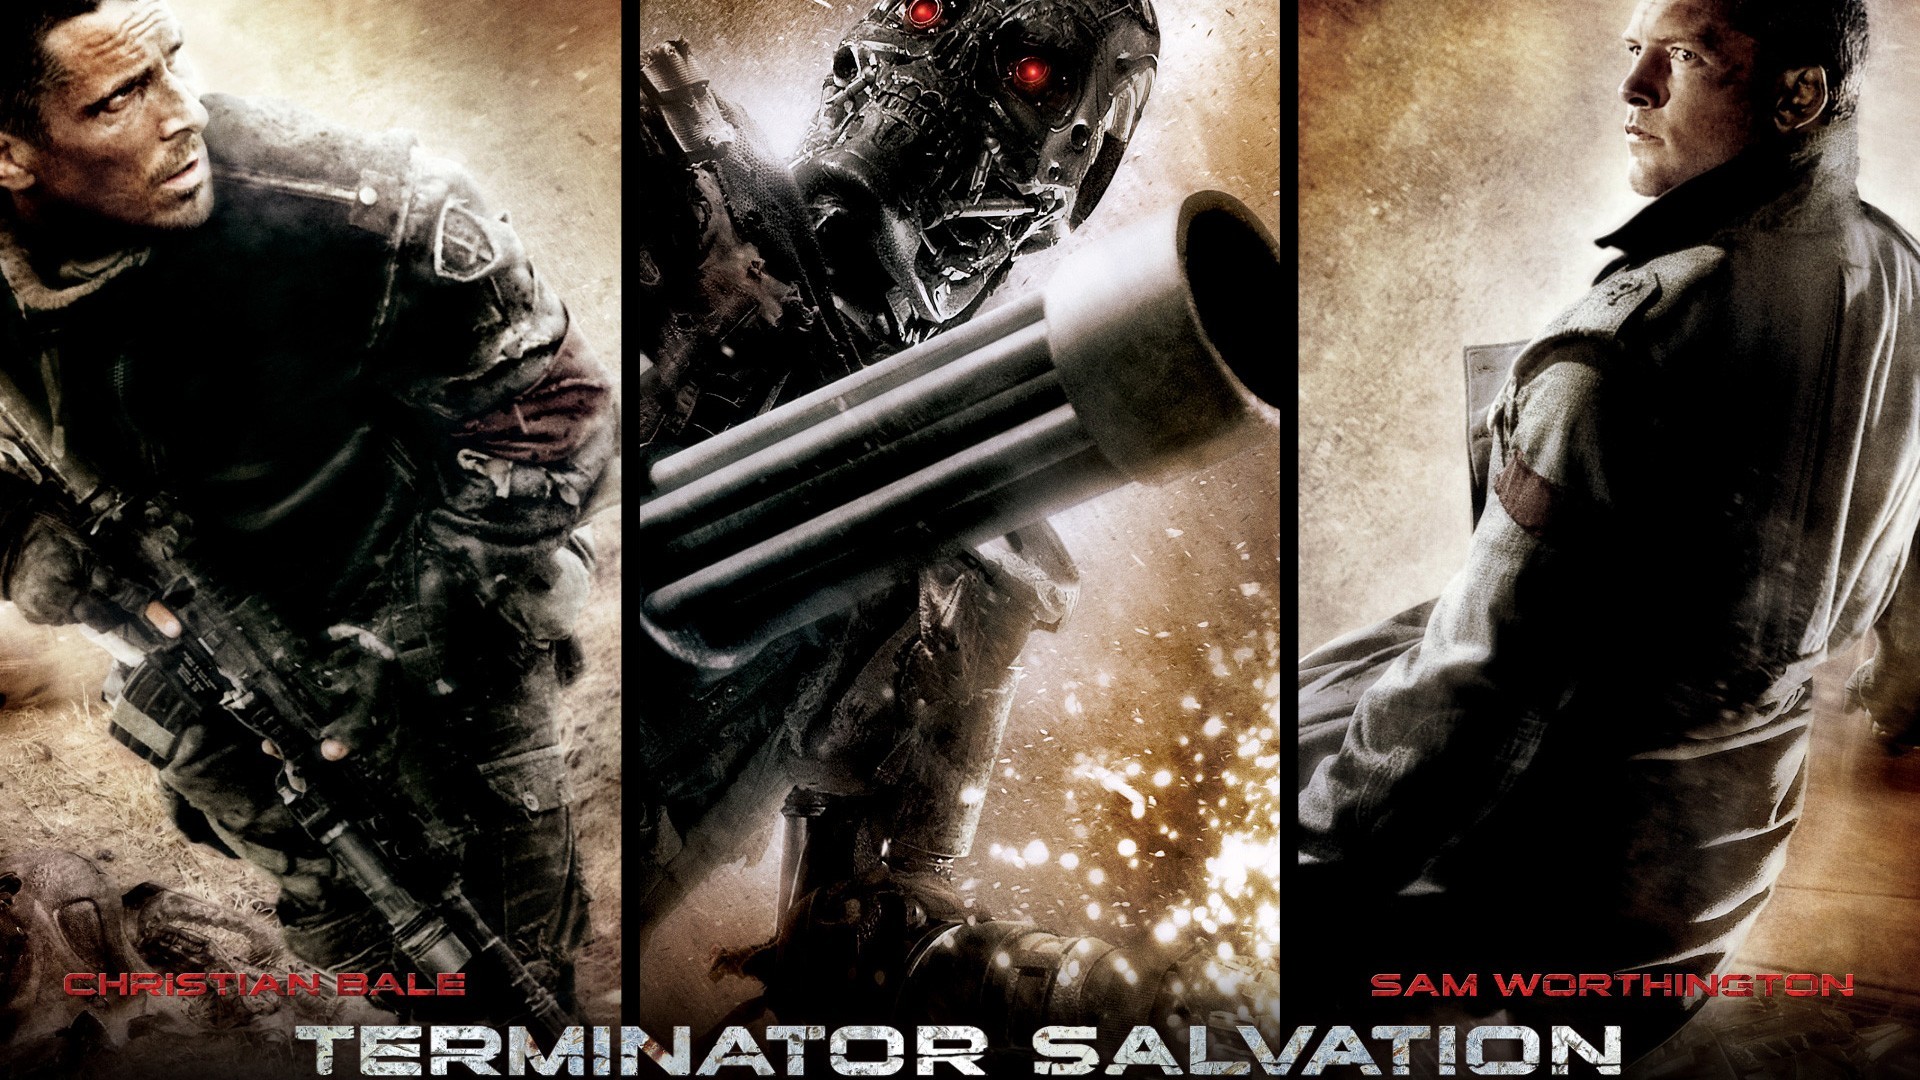 General 1920x1080 movies Terminator Terminator Salvation collage robot movie poster science fiction Sam Worthington Christian Bale